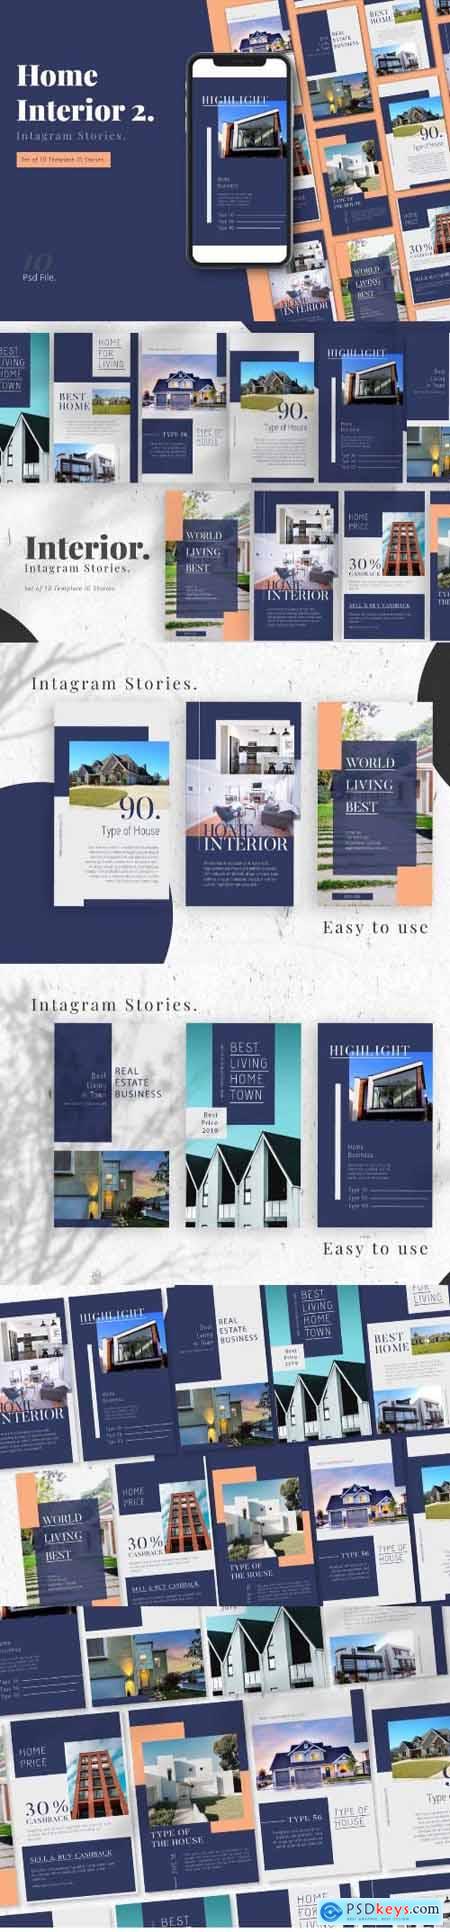 Interior Home Promotion Instagram Stories